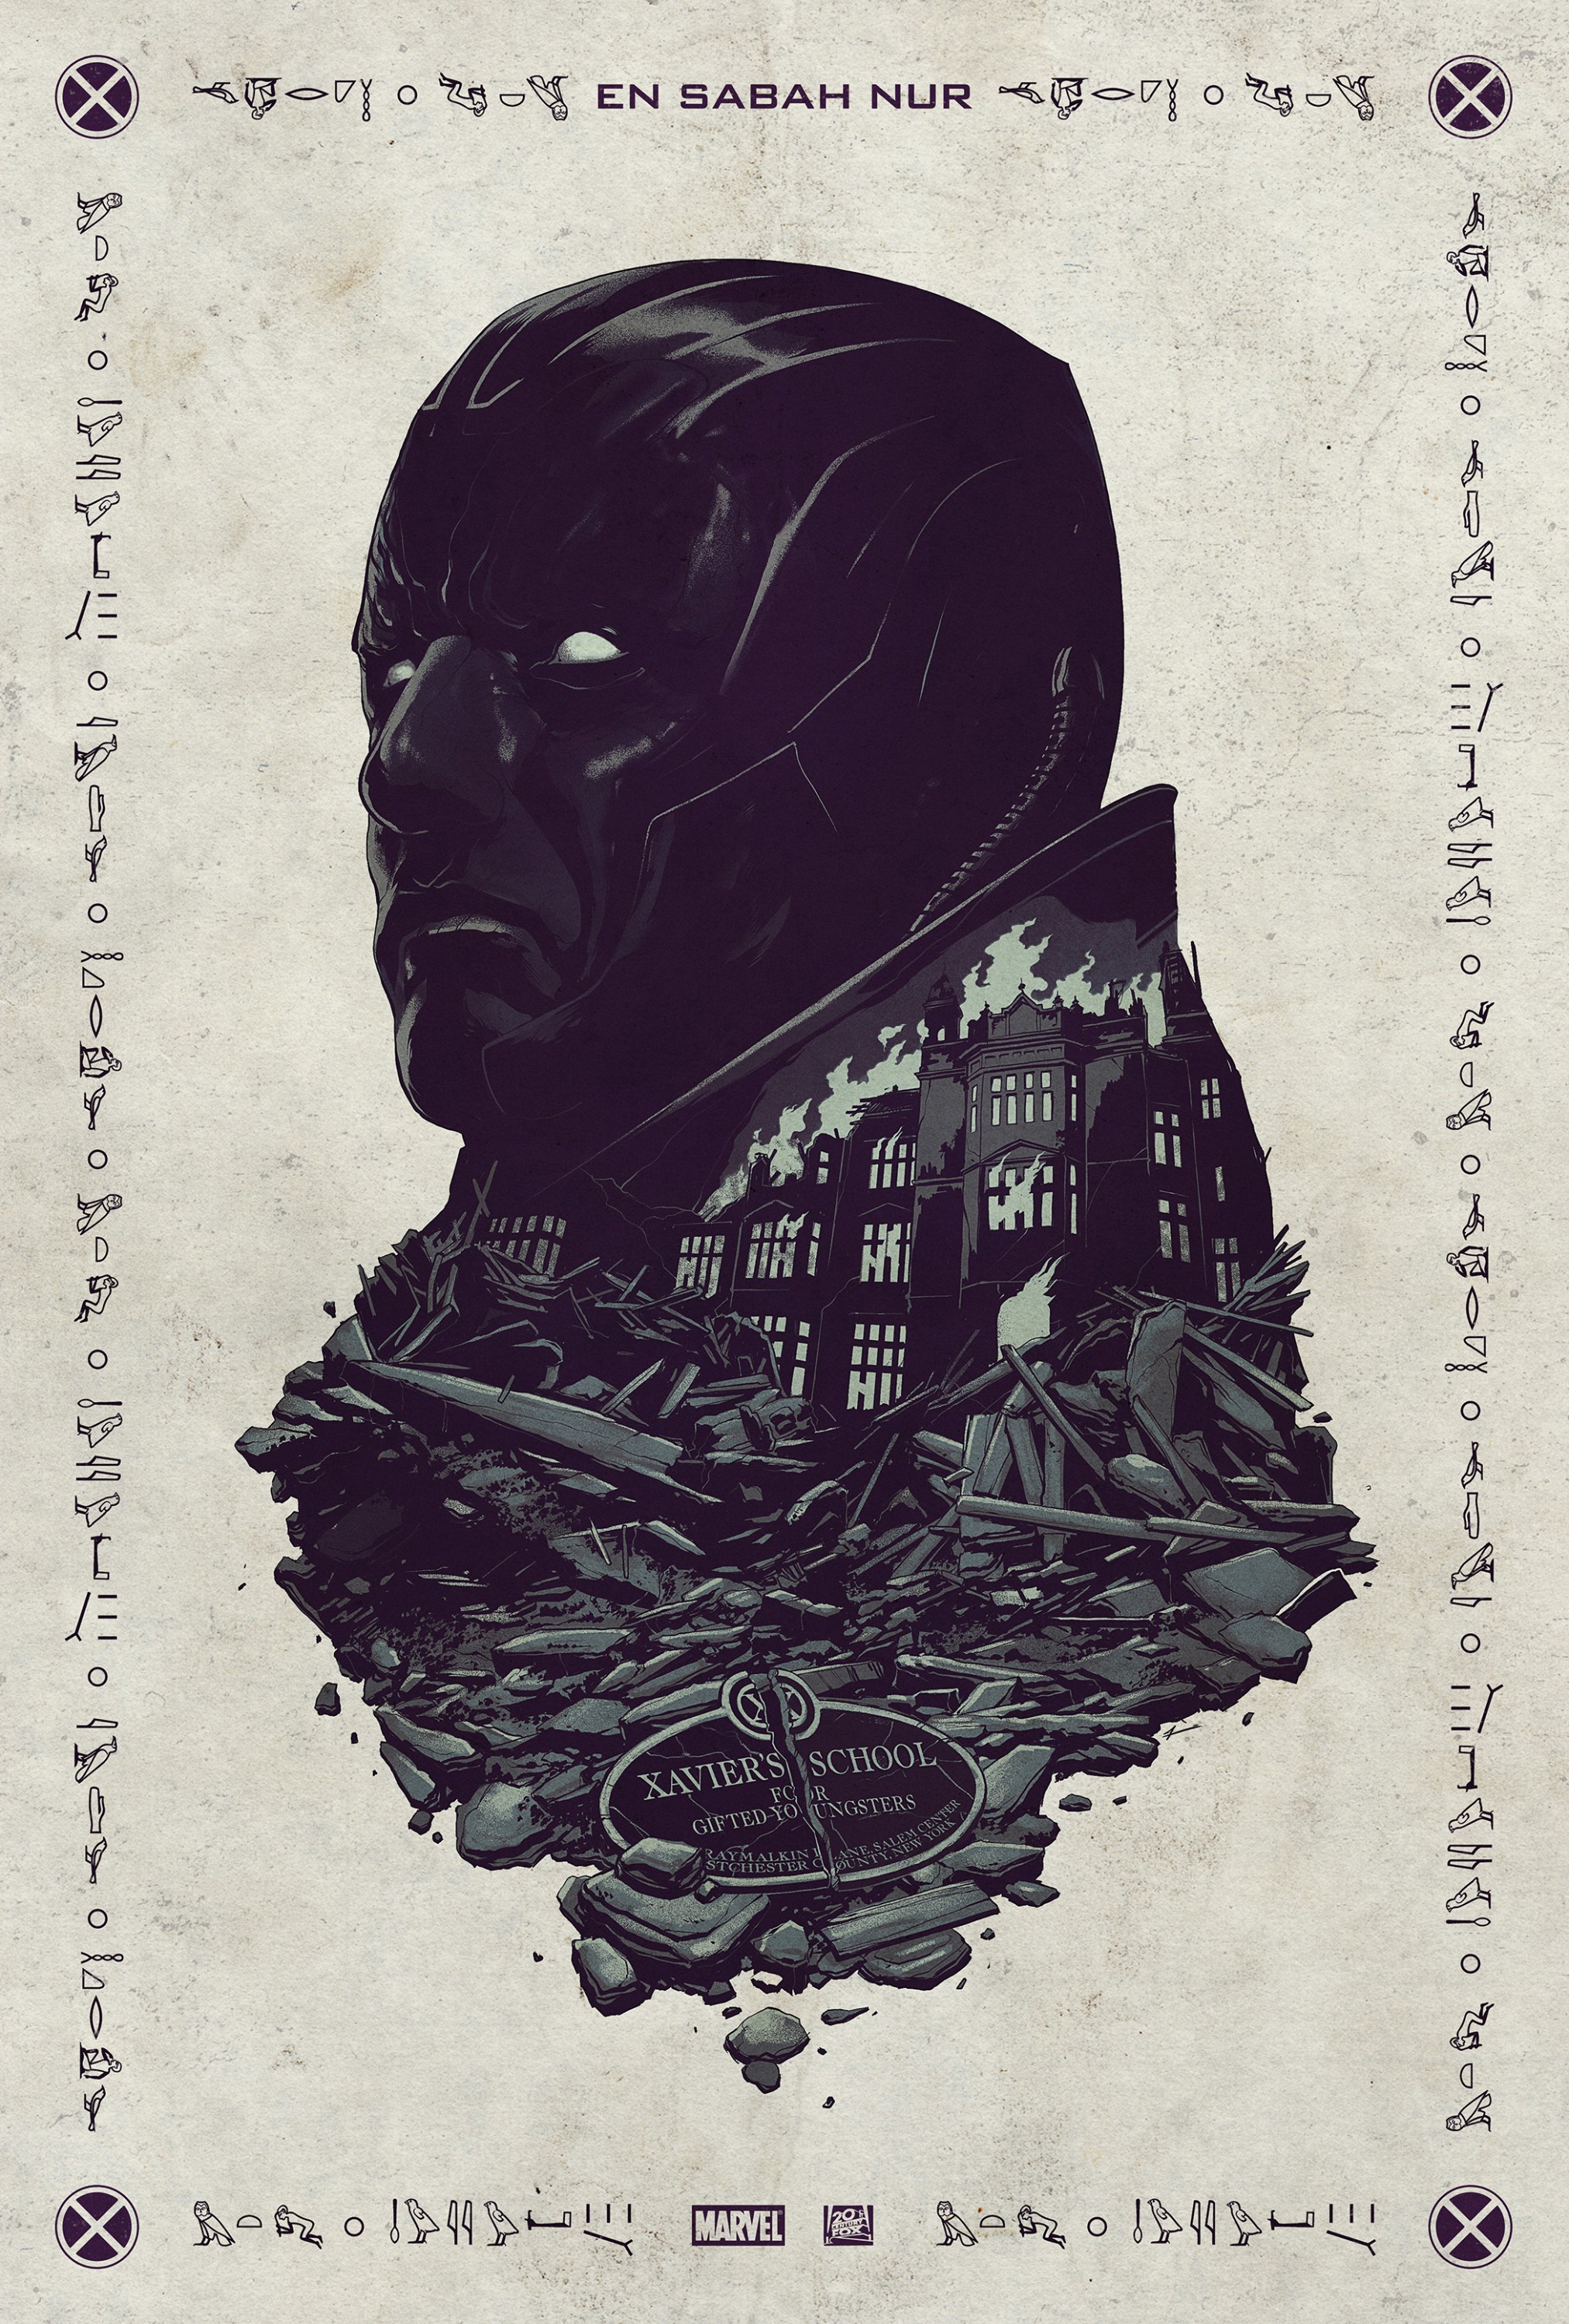 Mega Sized Movie Poster Image for X-Men: Apocalypse (#1 of 19)